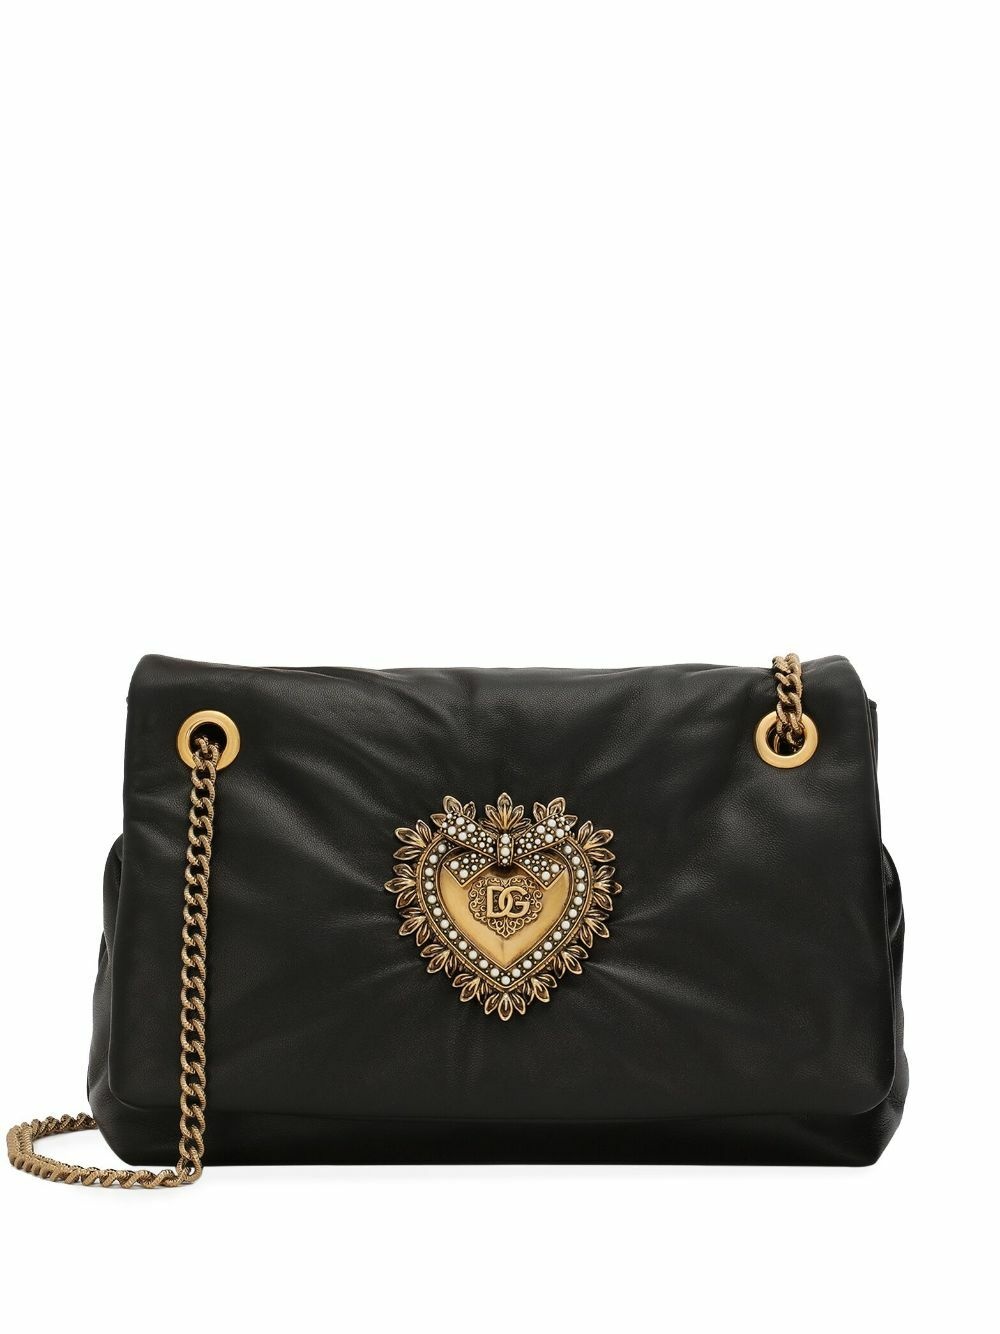 DOLCE & GABBANA - Devotion Leather Shoulder Bag Dolce & Gabbana